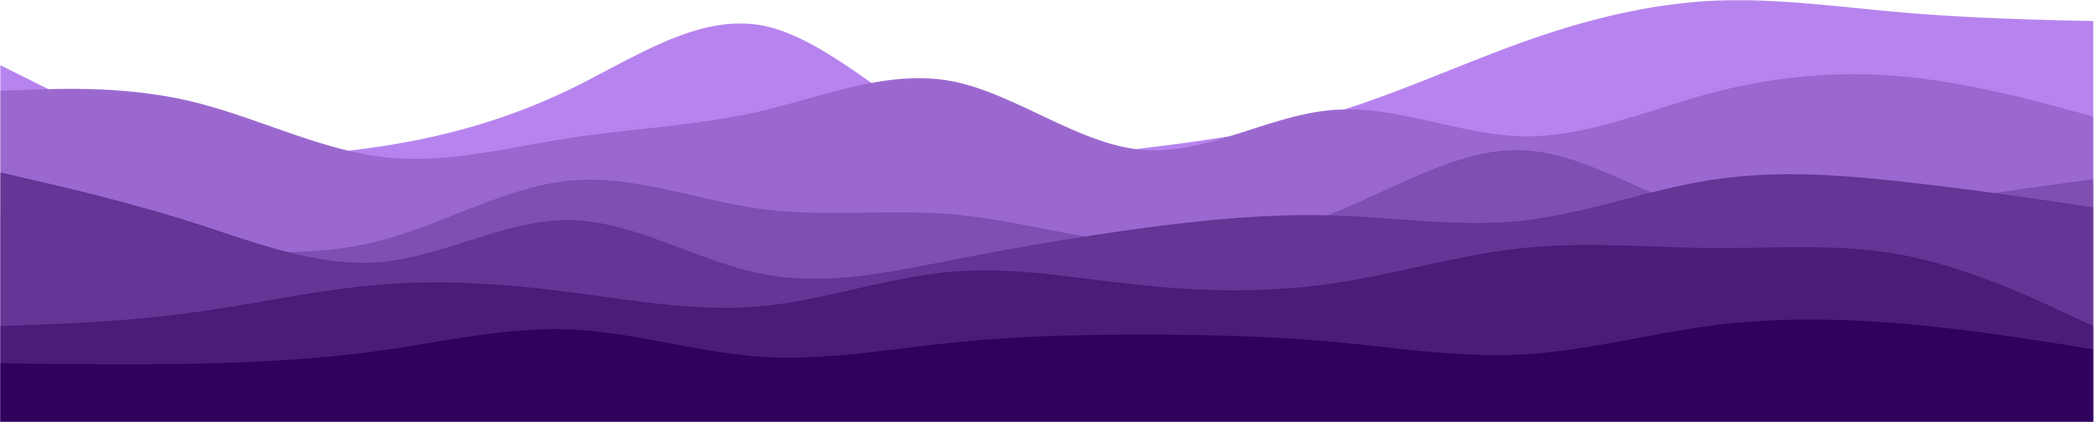 purple  Wave layered background